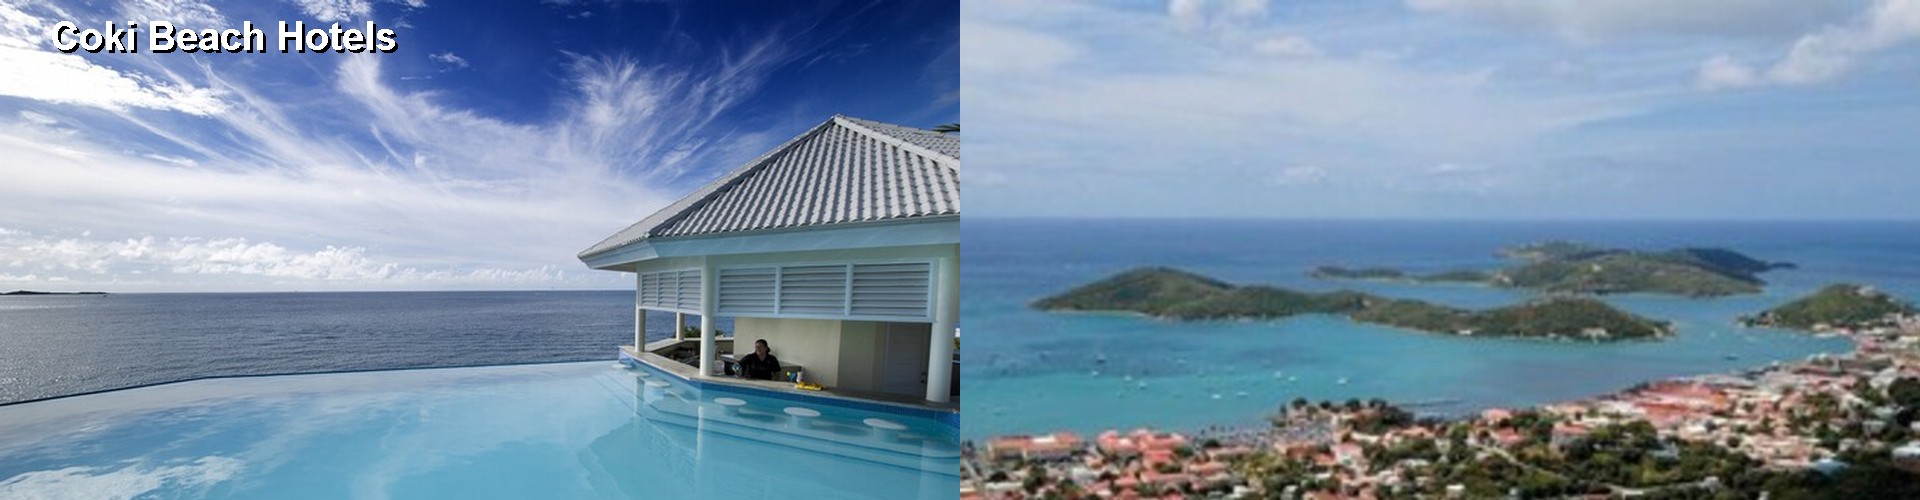 5 Best Hotels near Coki Beach